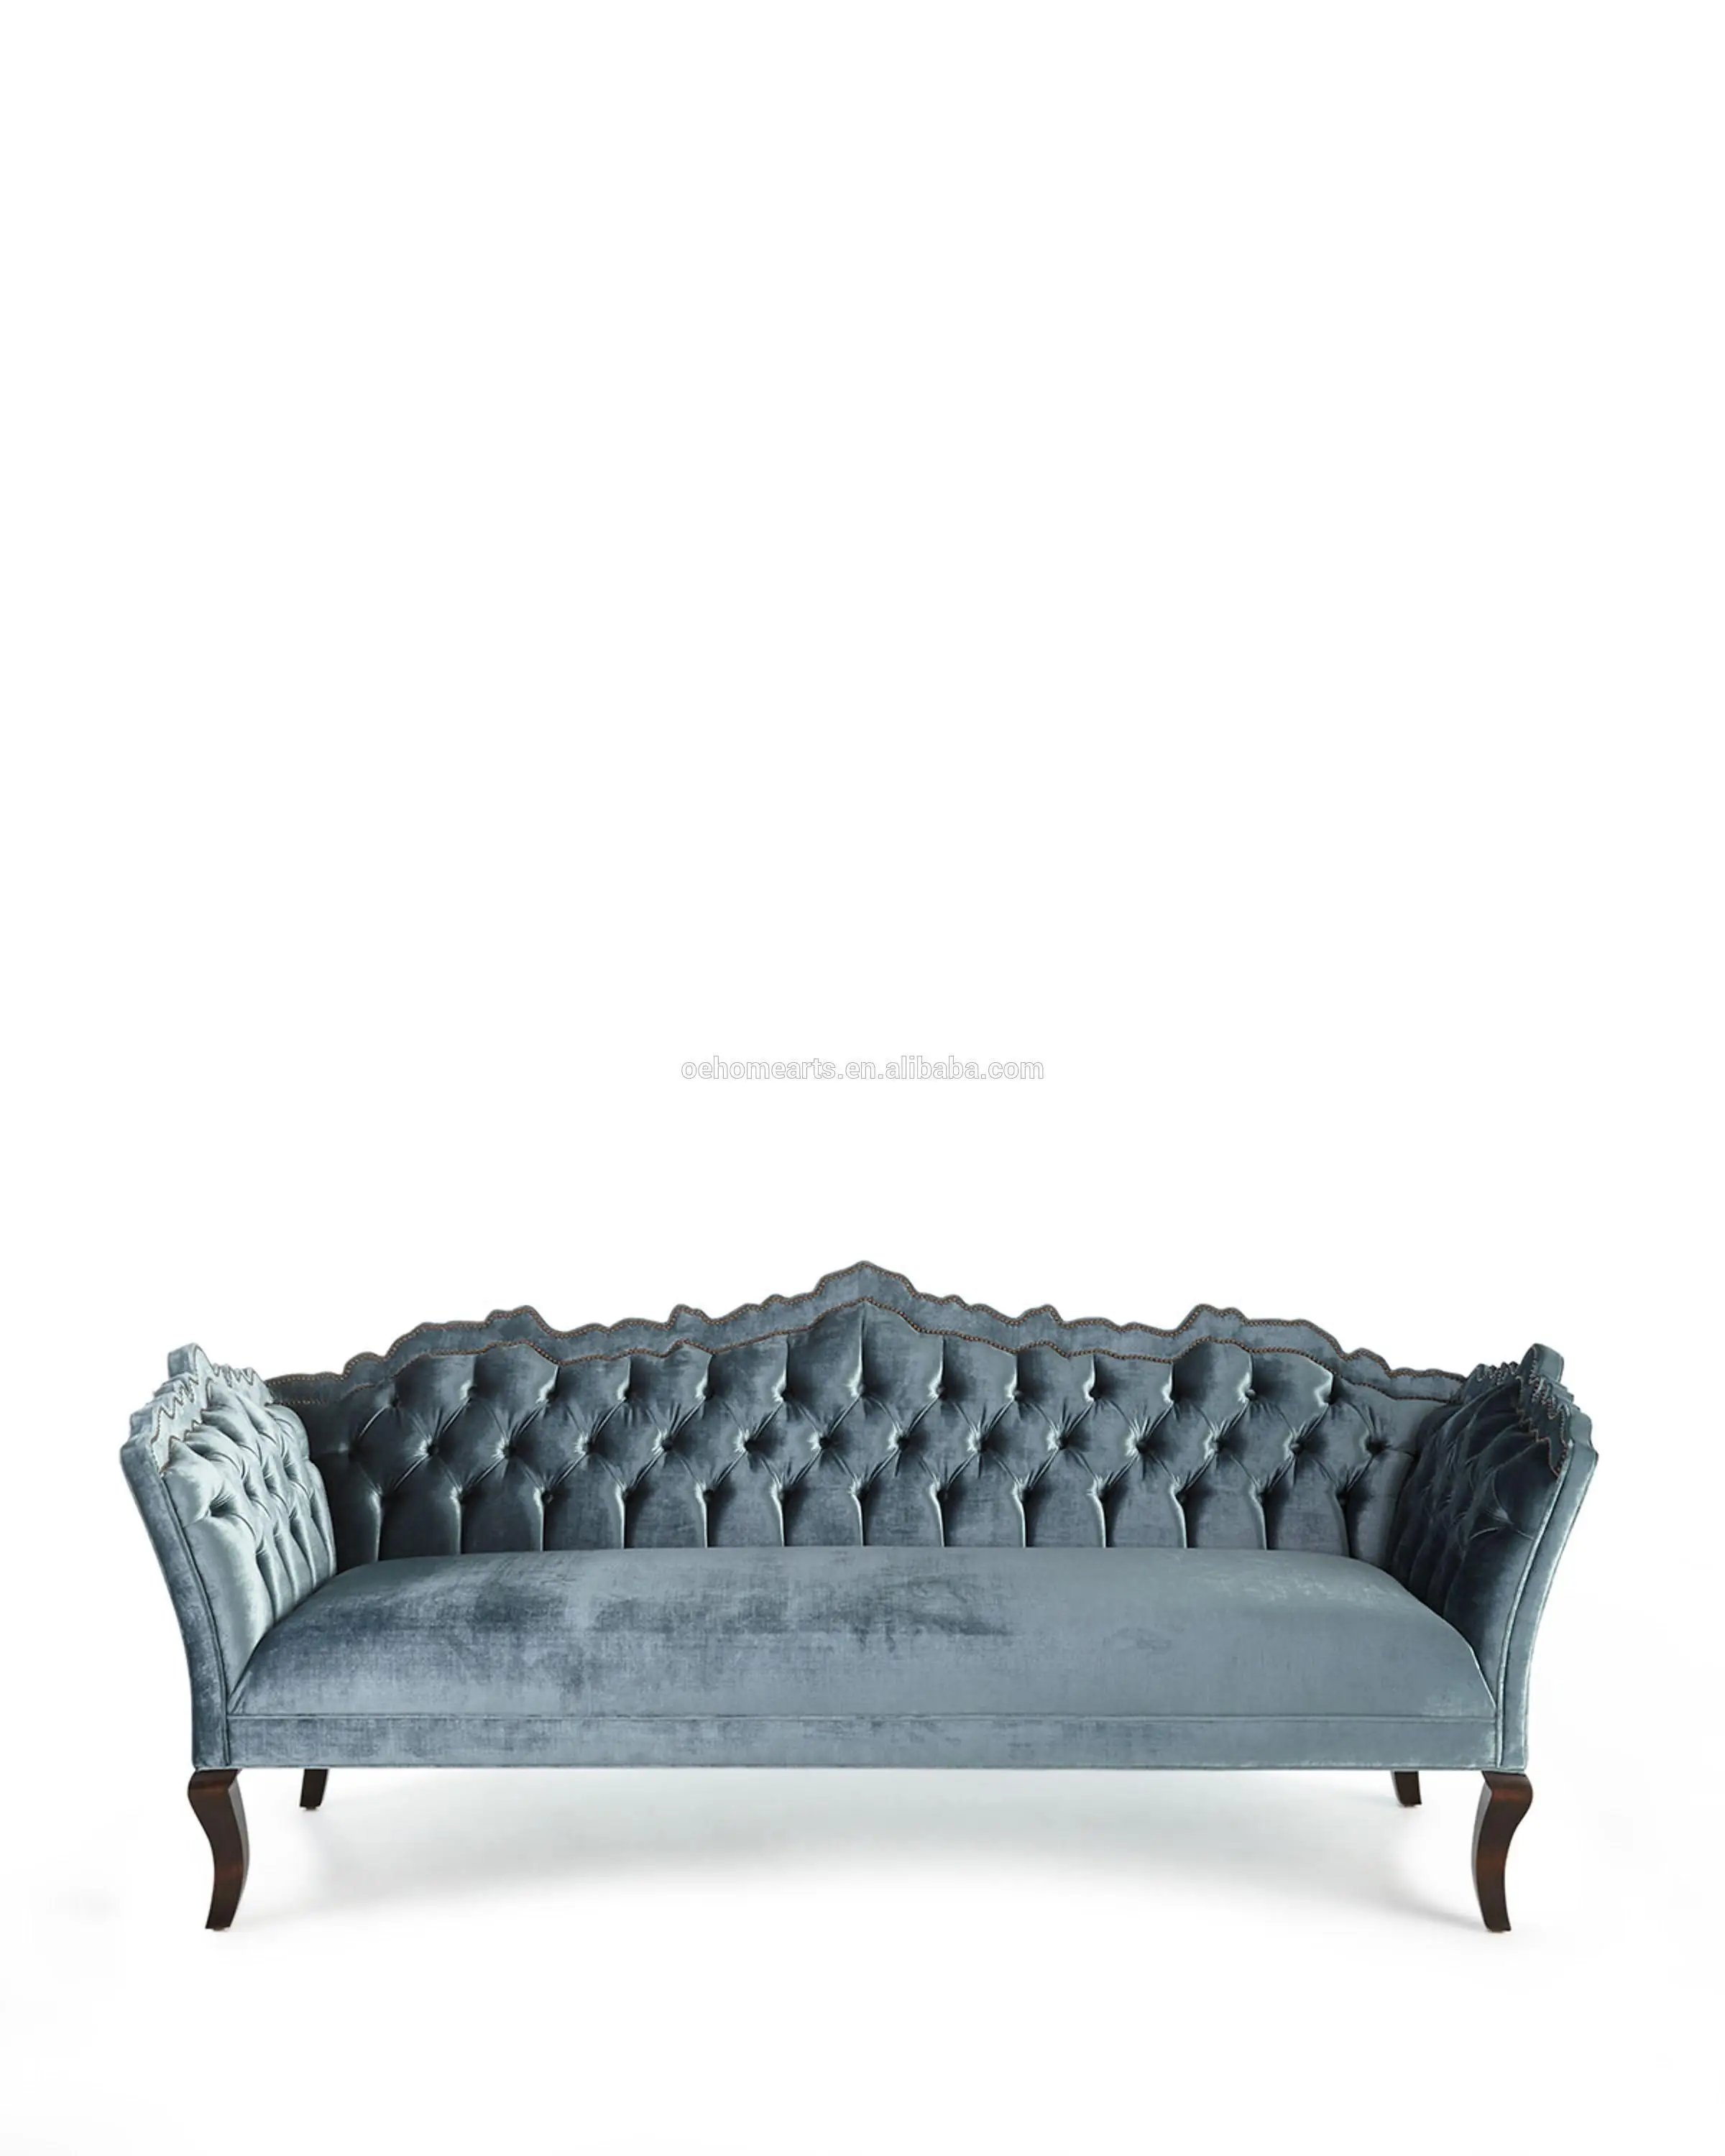 Sf00060 Private Design China Manufacturer Free Sample Sofa Furniture In Gujrat Pakistan - Buy